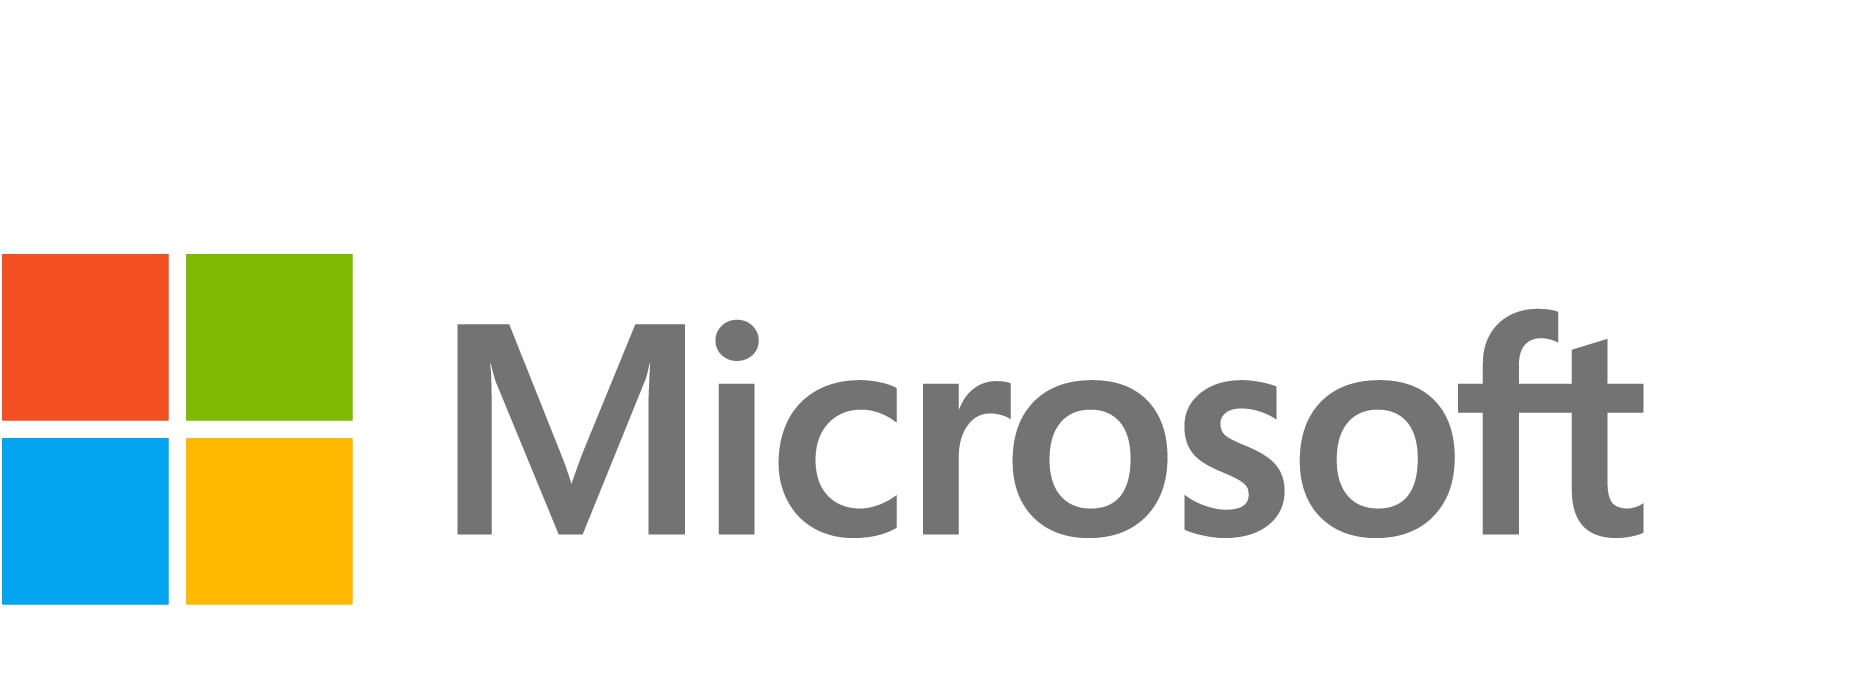 Microsoft Office 365 E5 - subscription license (1 month) - 1 license